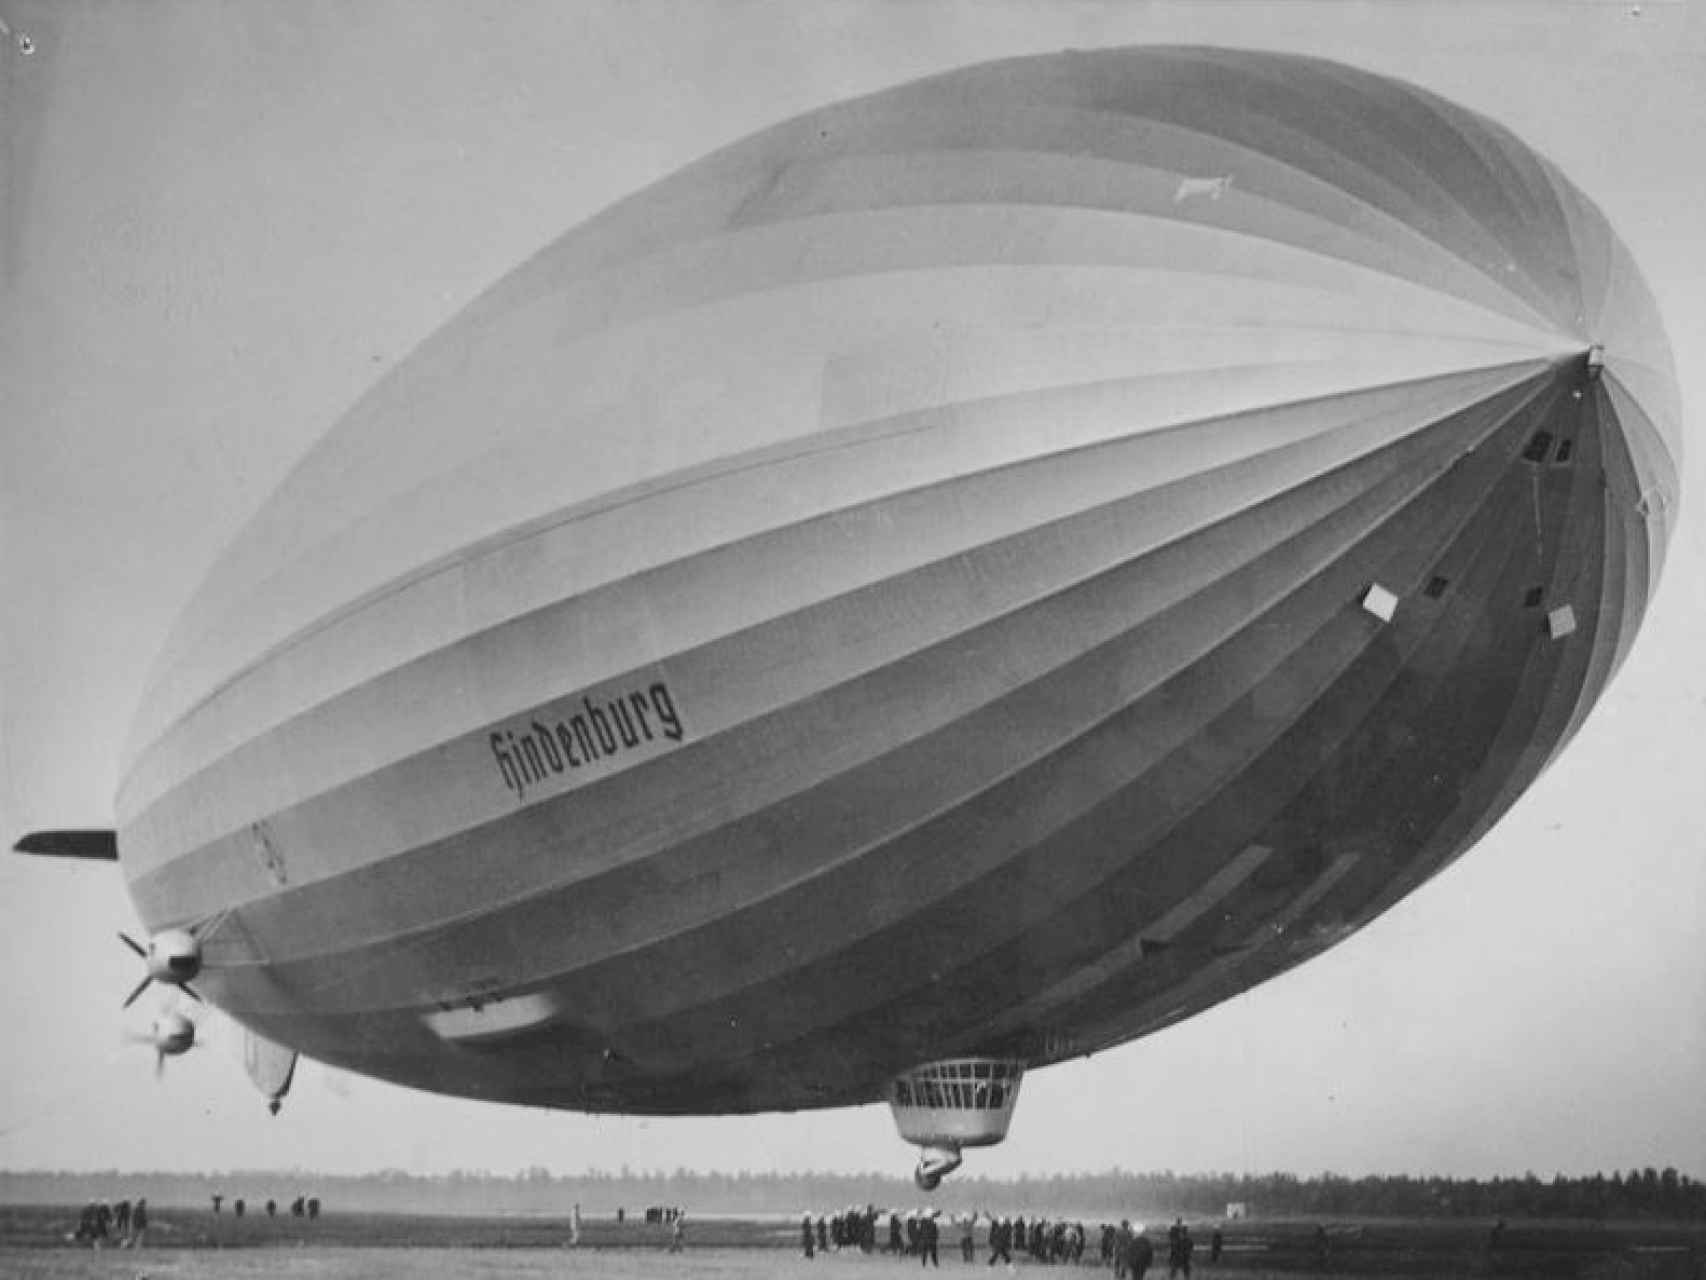 El LZ 129 Hindenburg